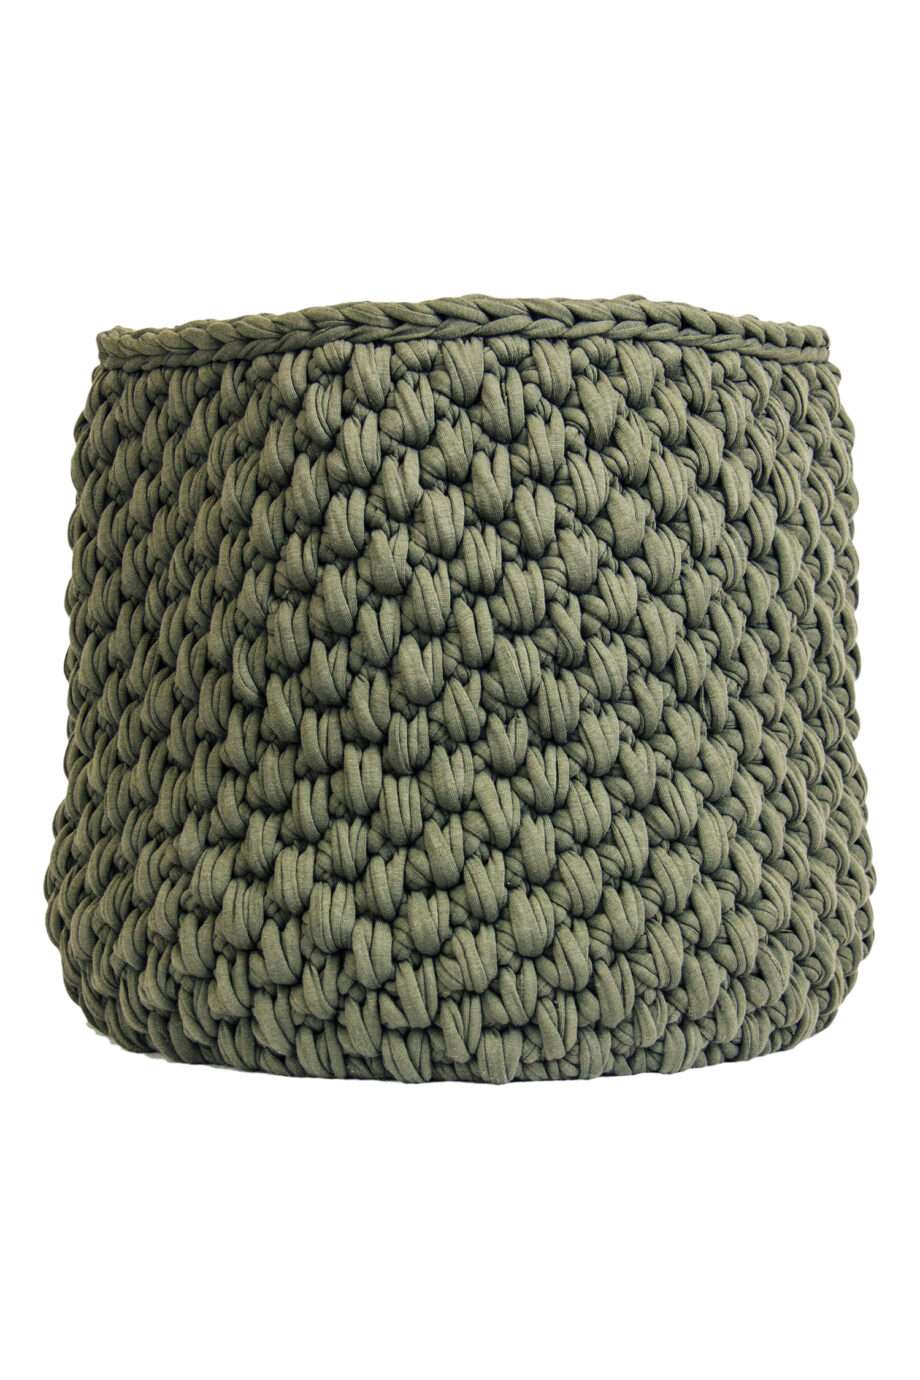 peony olive green crochet cotton basket large